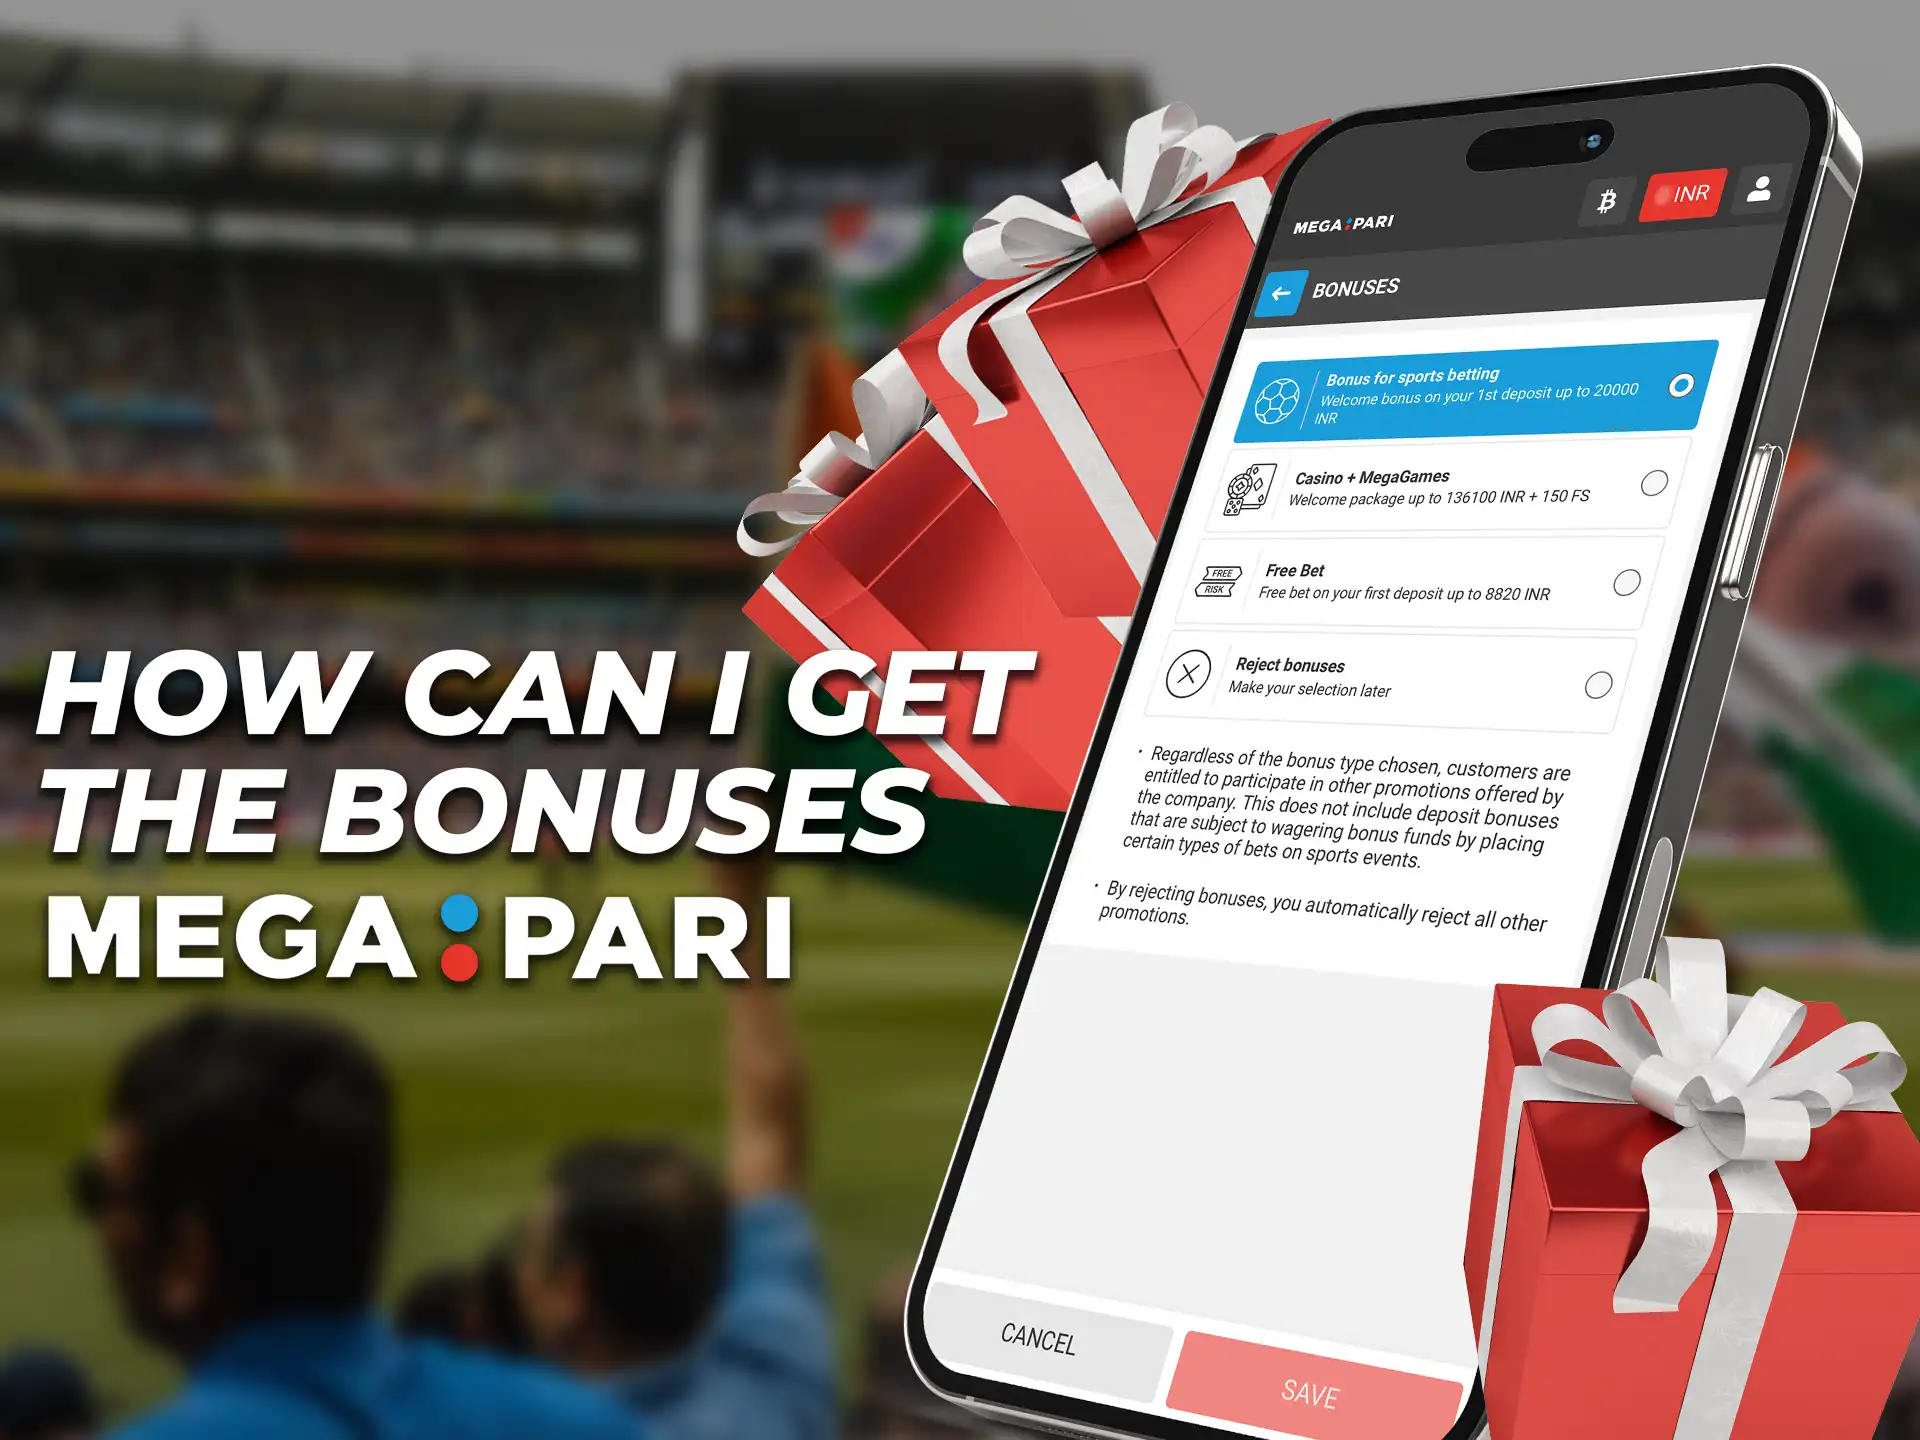 Register for bonuses on the Megapari app and make your first deposit.